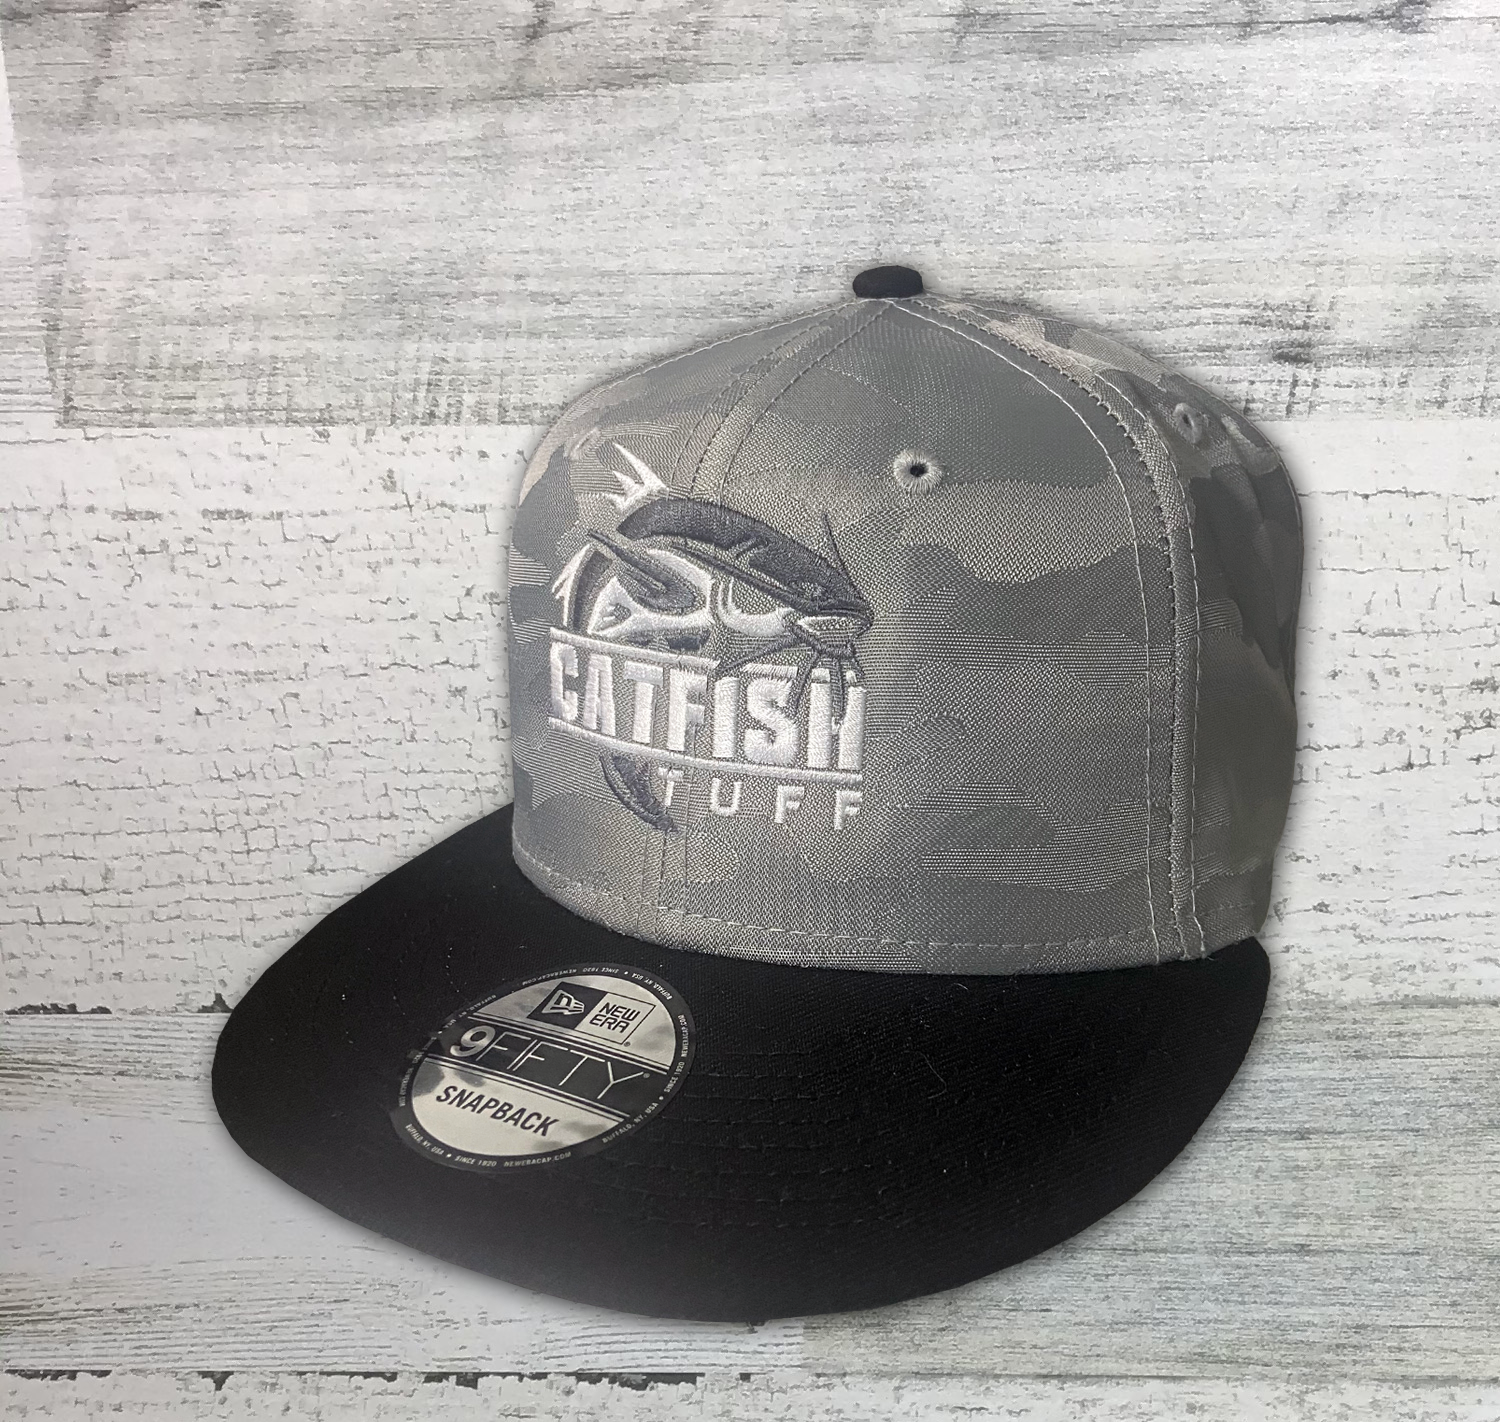 Catfish Tuff - Tonal Camo - Flat Bill Snapback Cap - Catfish Hat